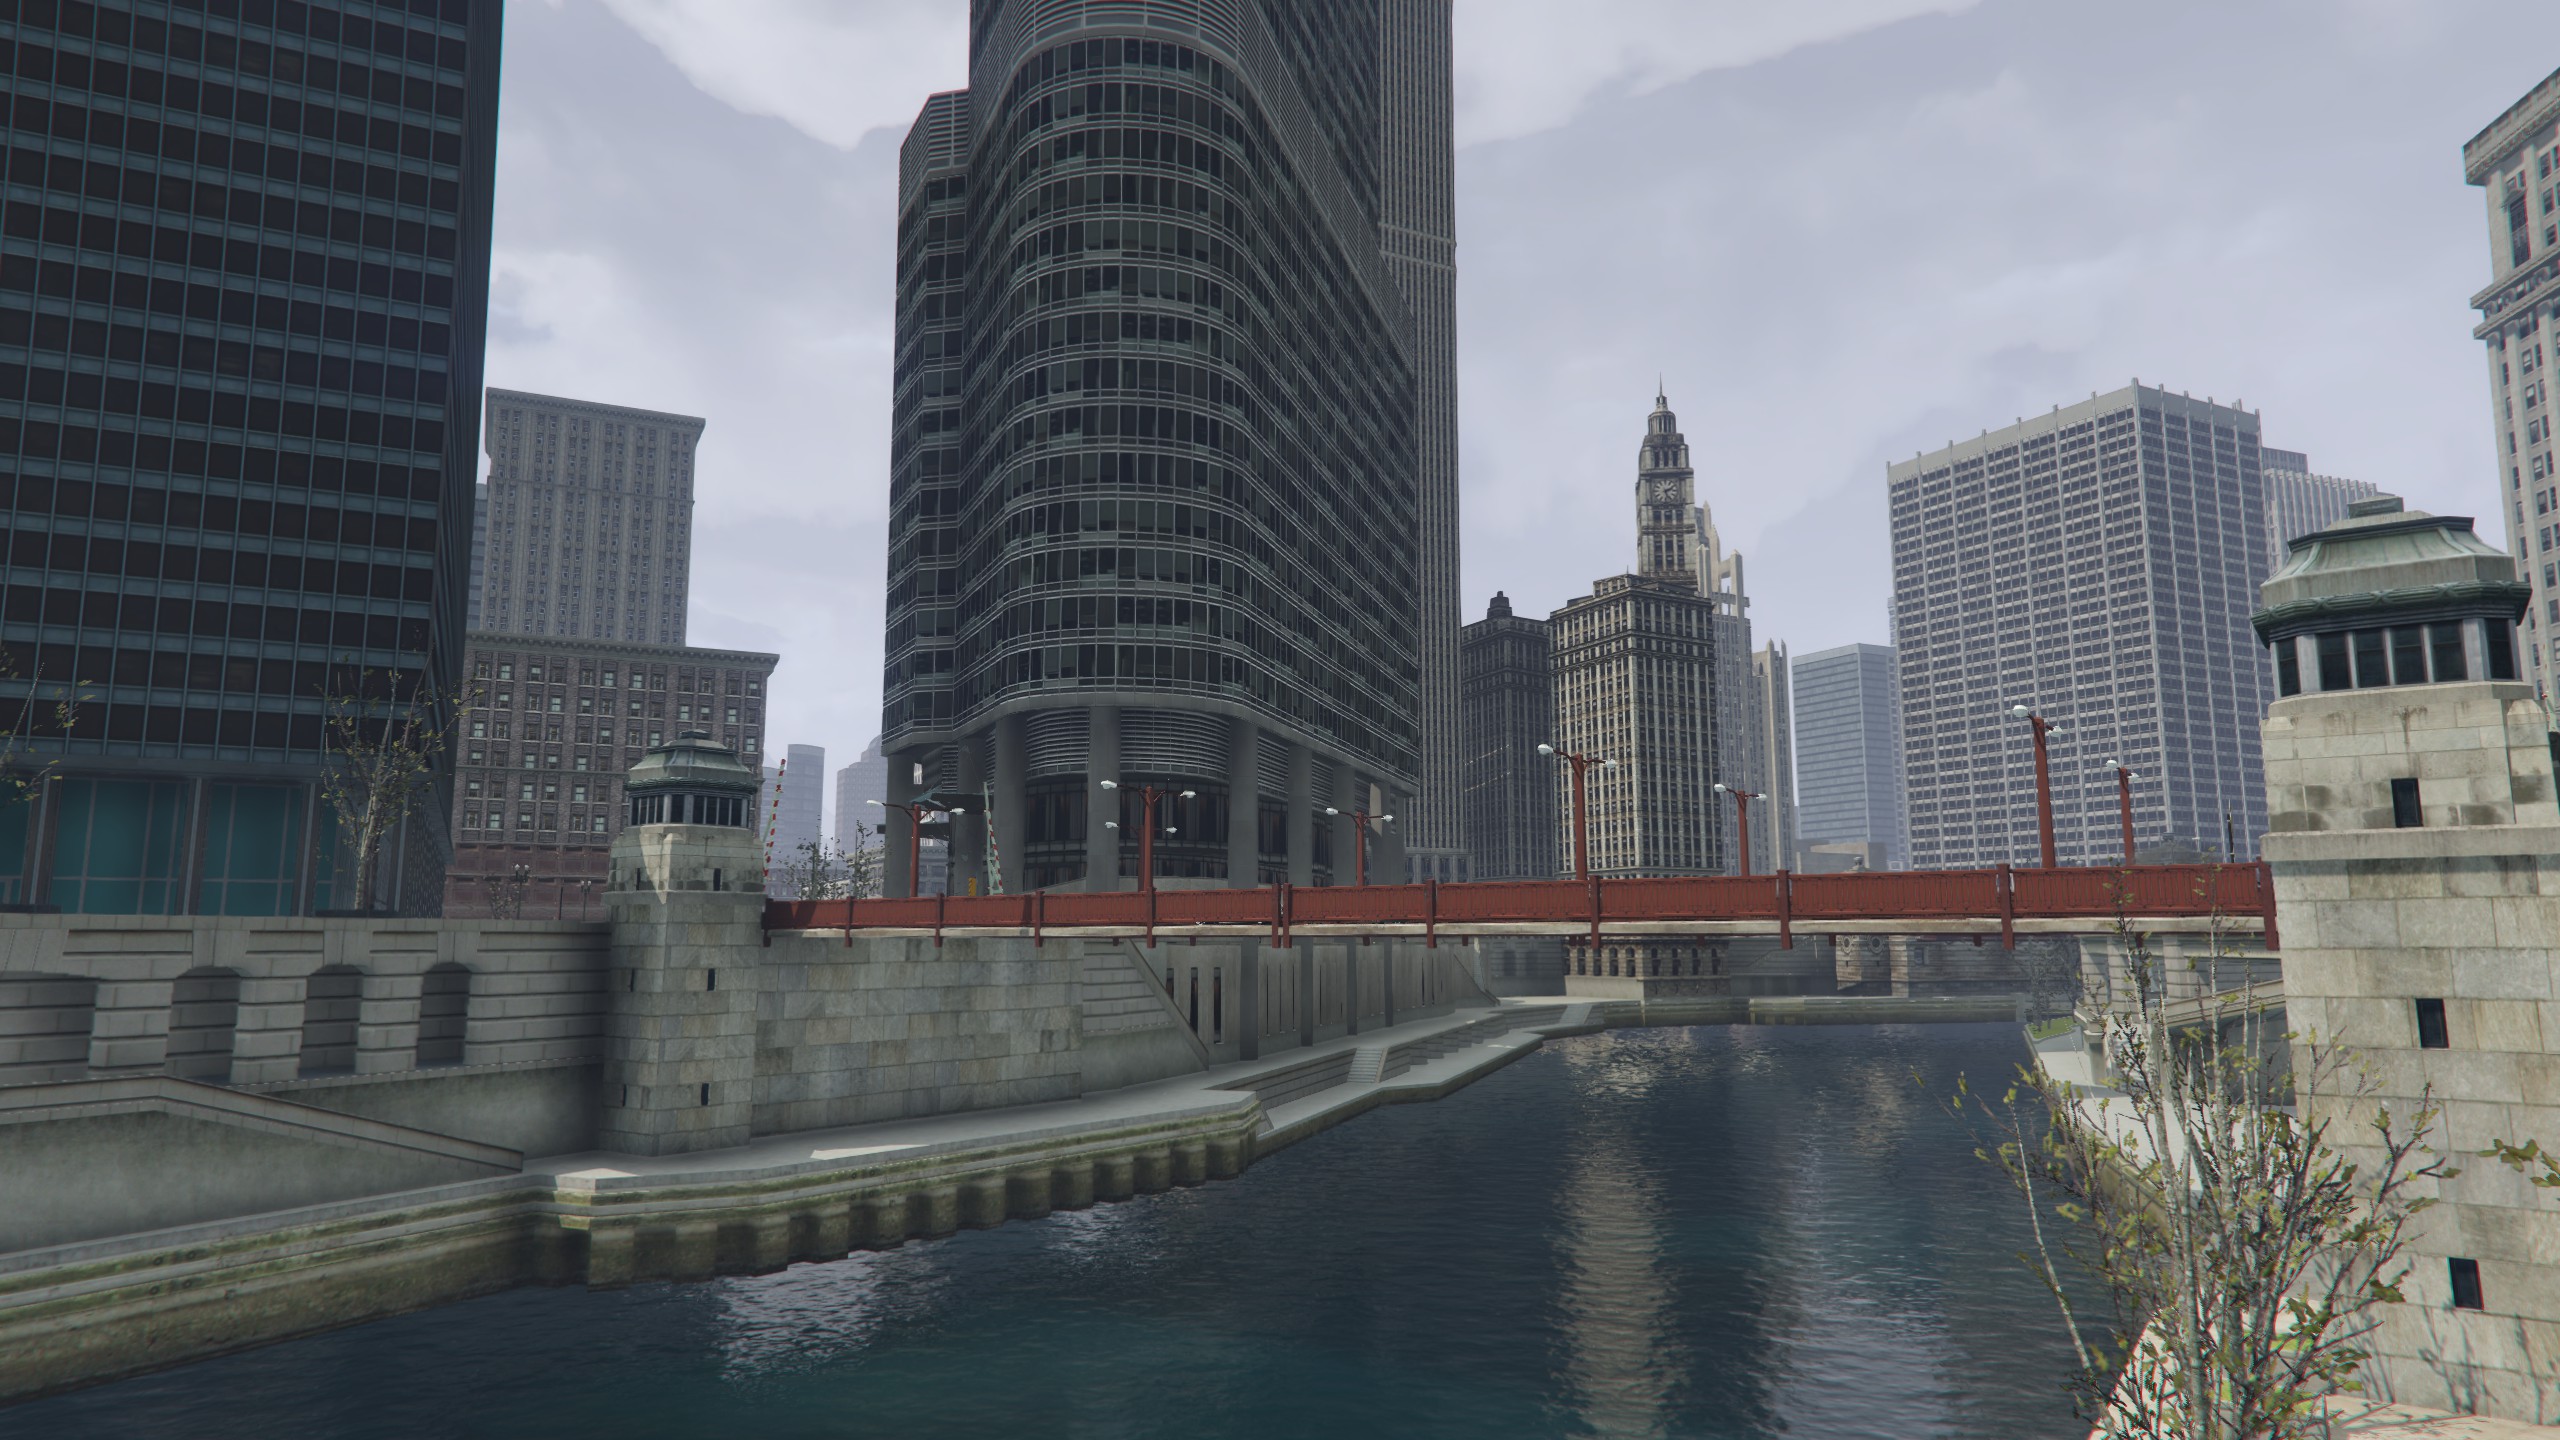 GTA 6 Chicago city rumors brought to life by insane GTA 5 mod - Dexerto